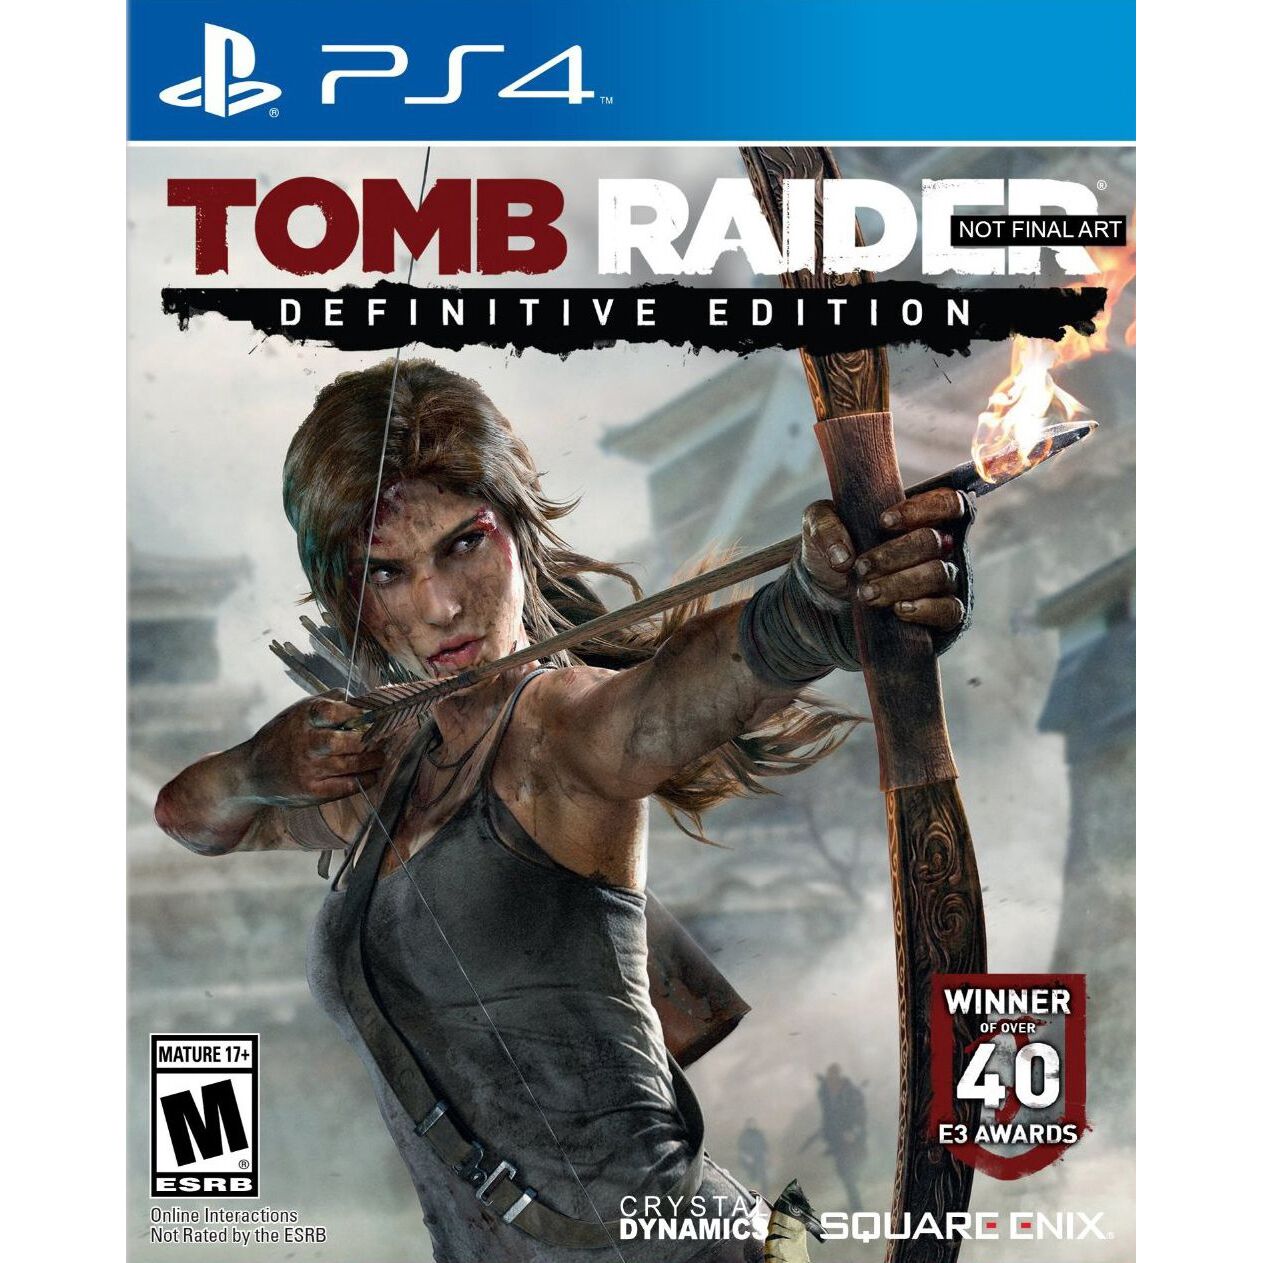 Tom ride. Tomb Raider Definitive Edition. Lara Croft Definitive Edition. Tomb Raider Definitive Edition ps4.